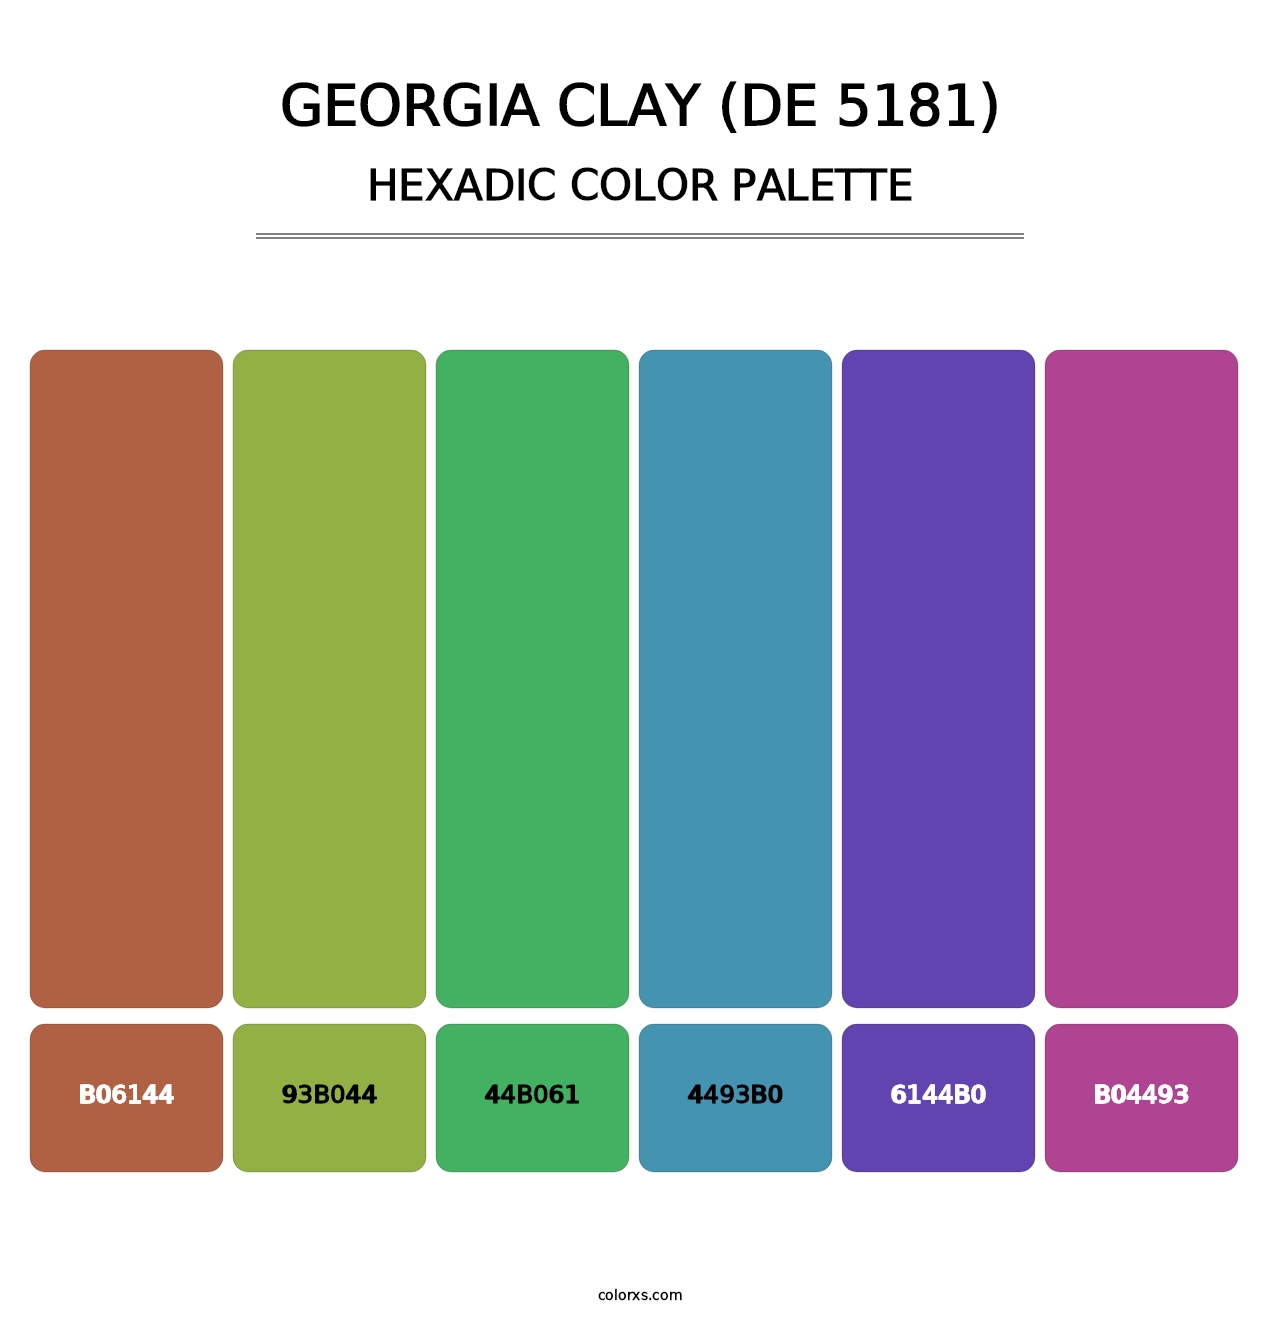 Georgia Clay (DE 5181) - Hexadic Color Palette